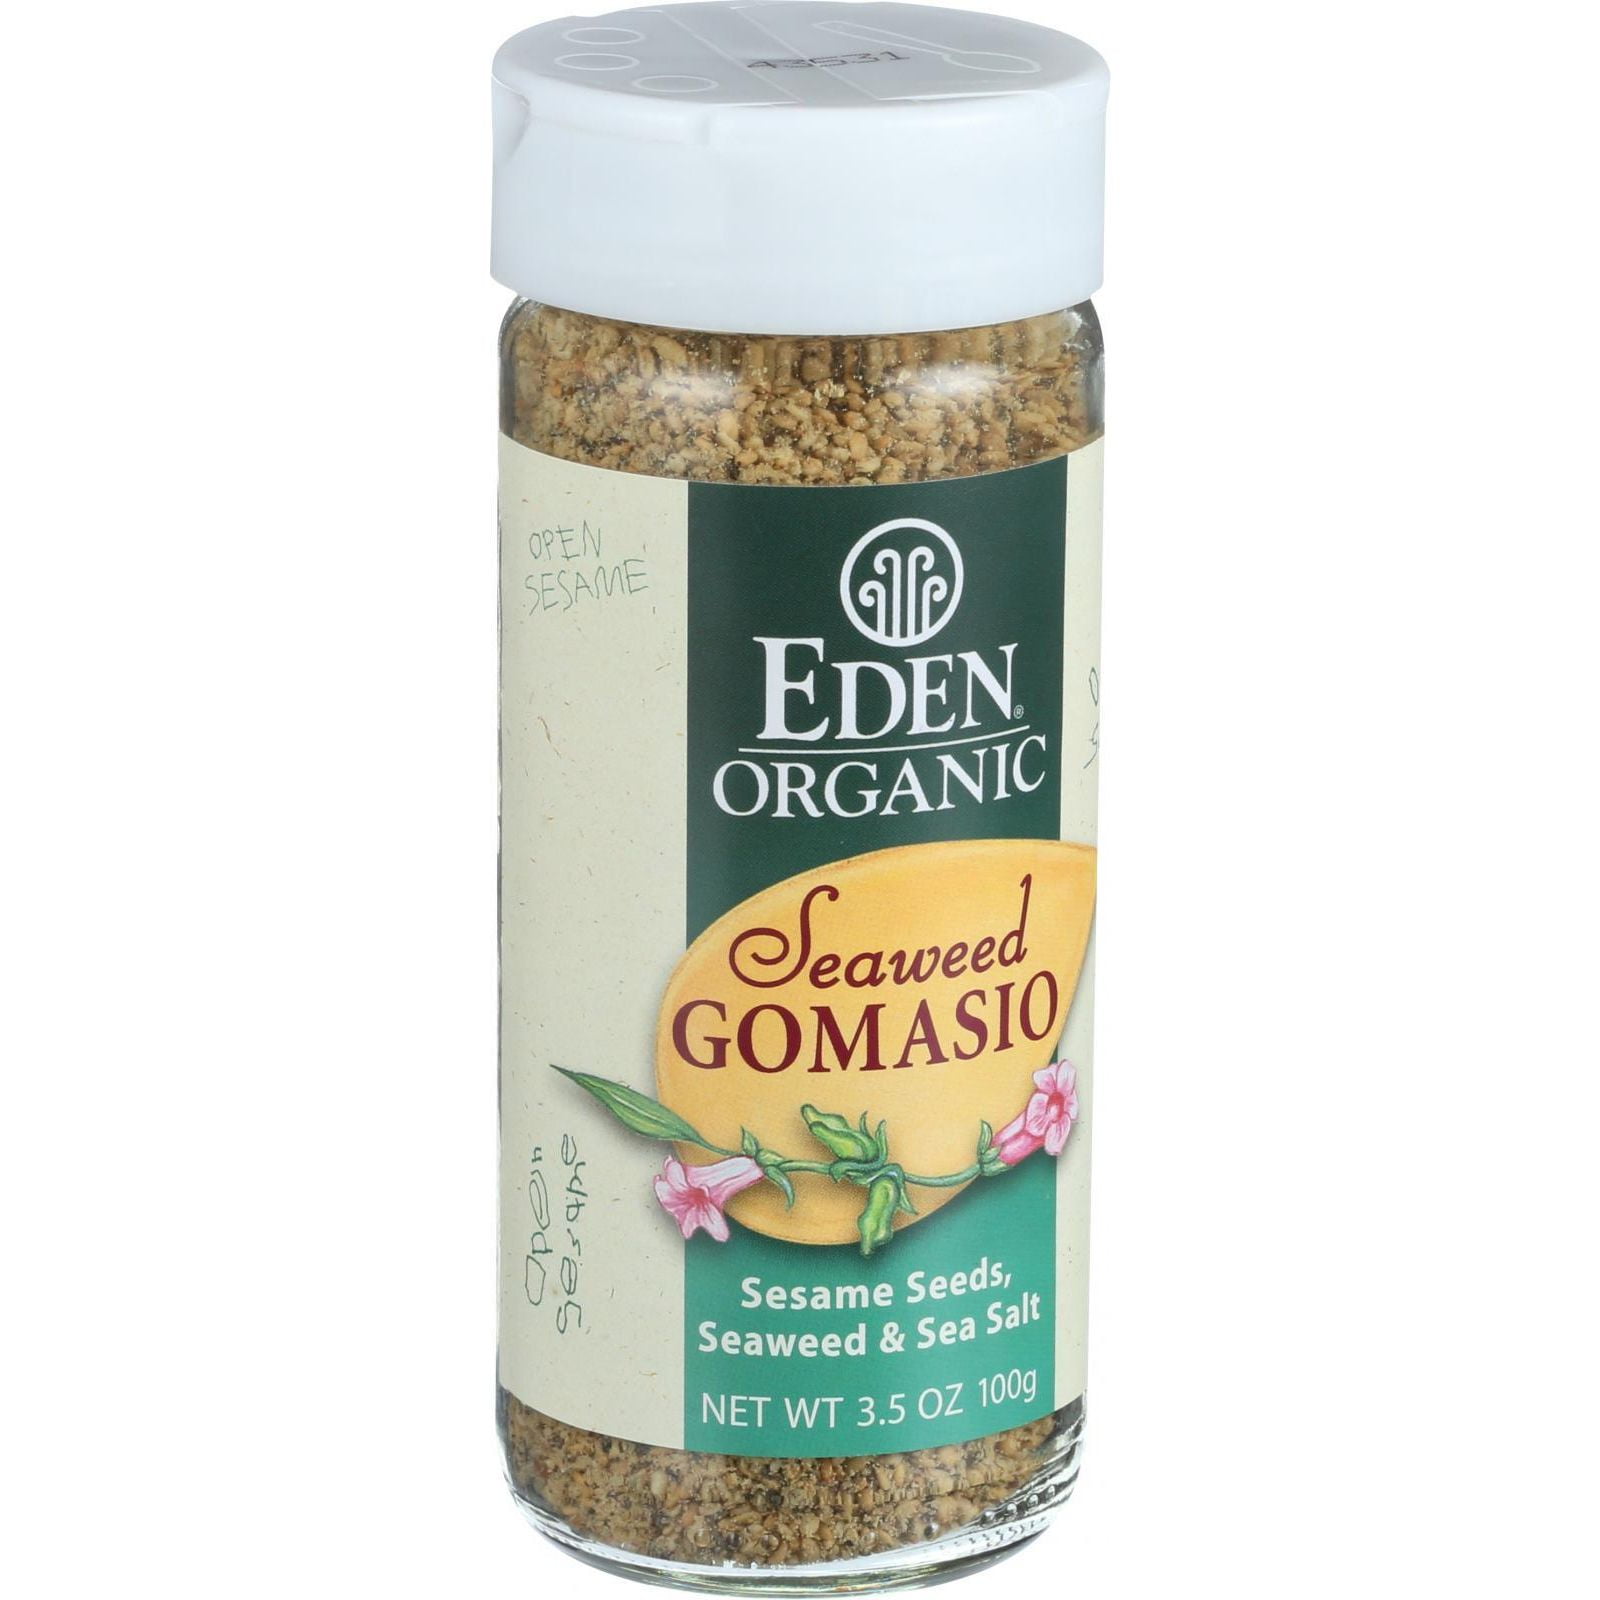 Gomasio Seasoning Blend, 2 oz, Landsea Gomasio